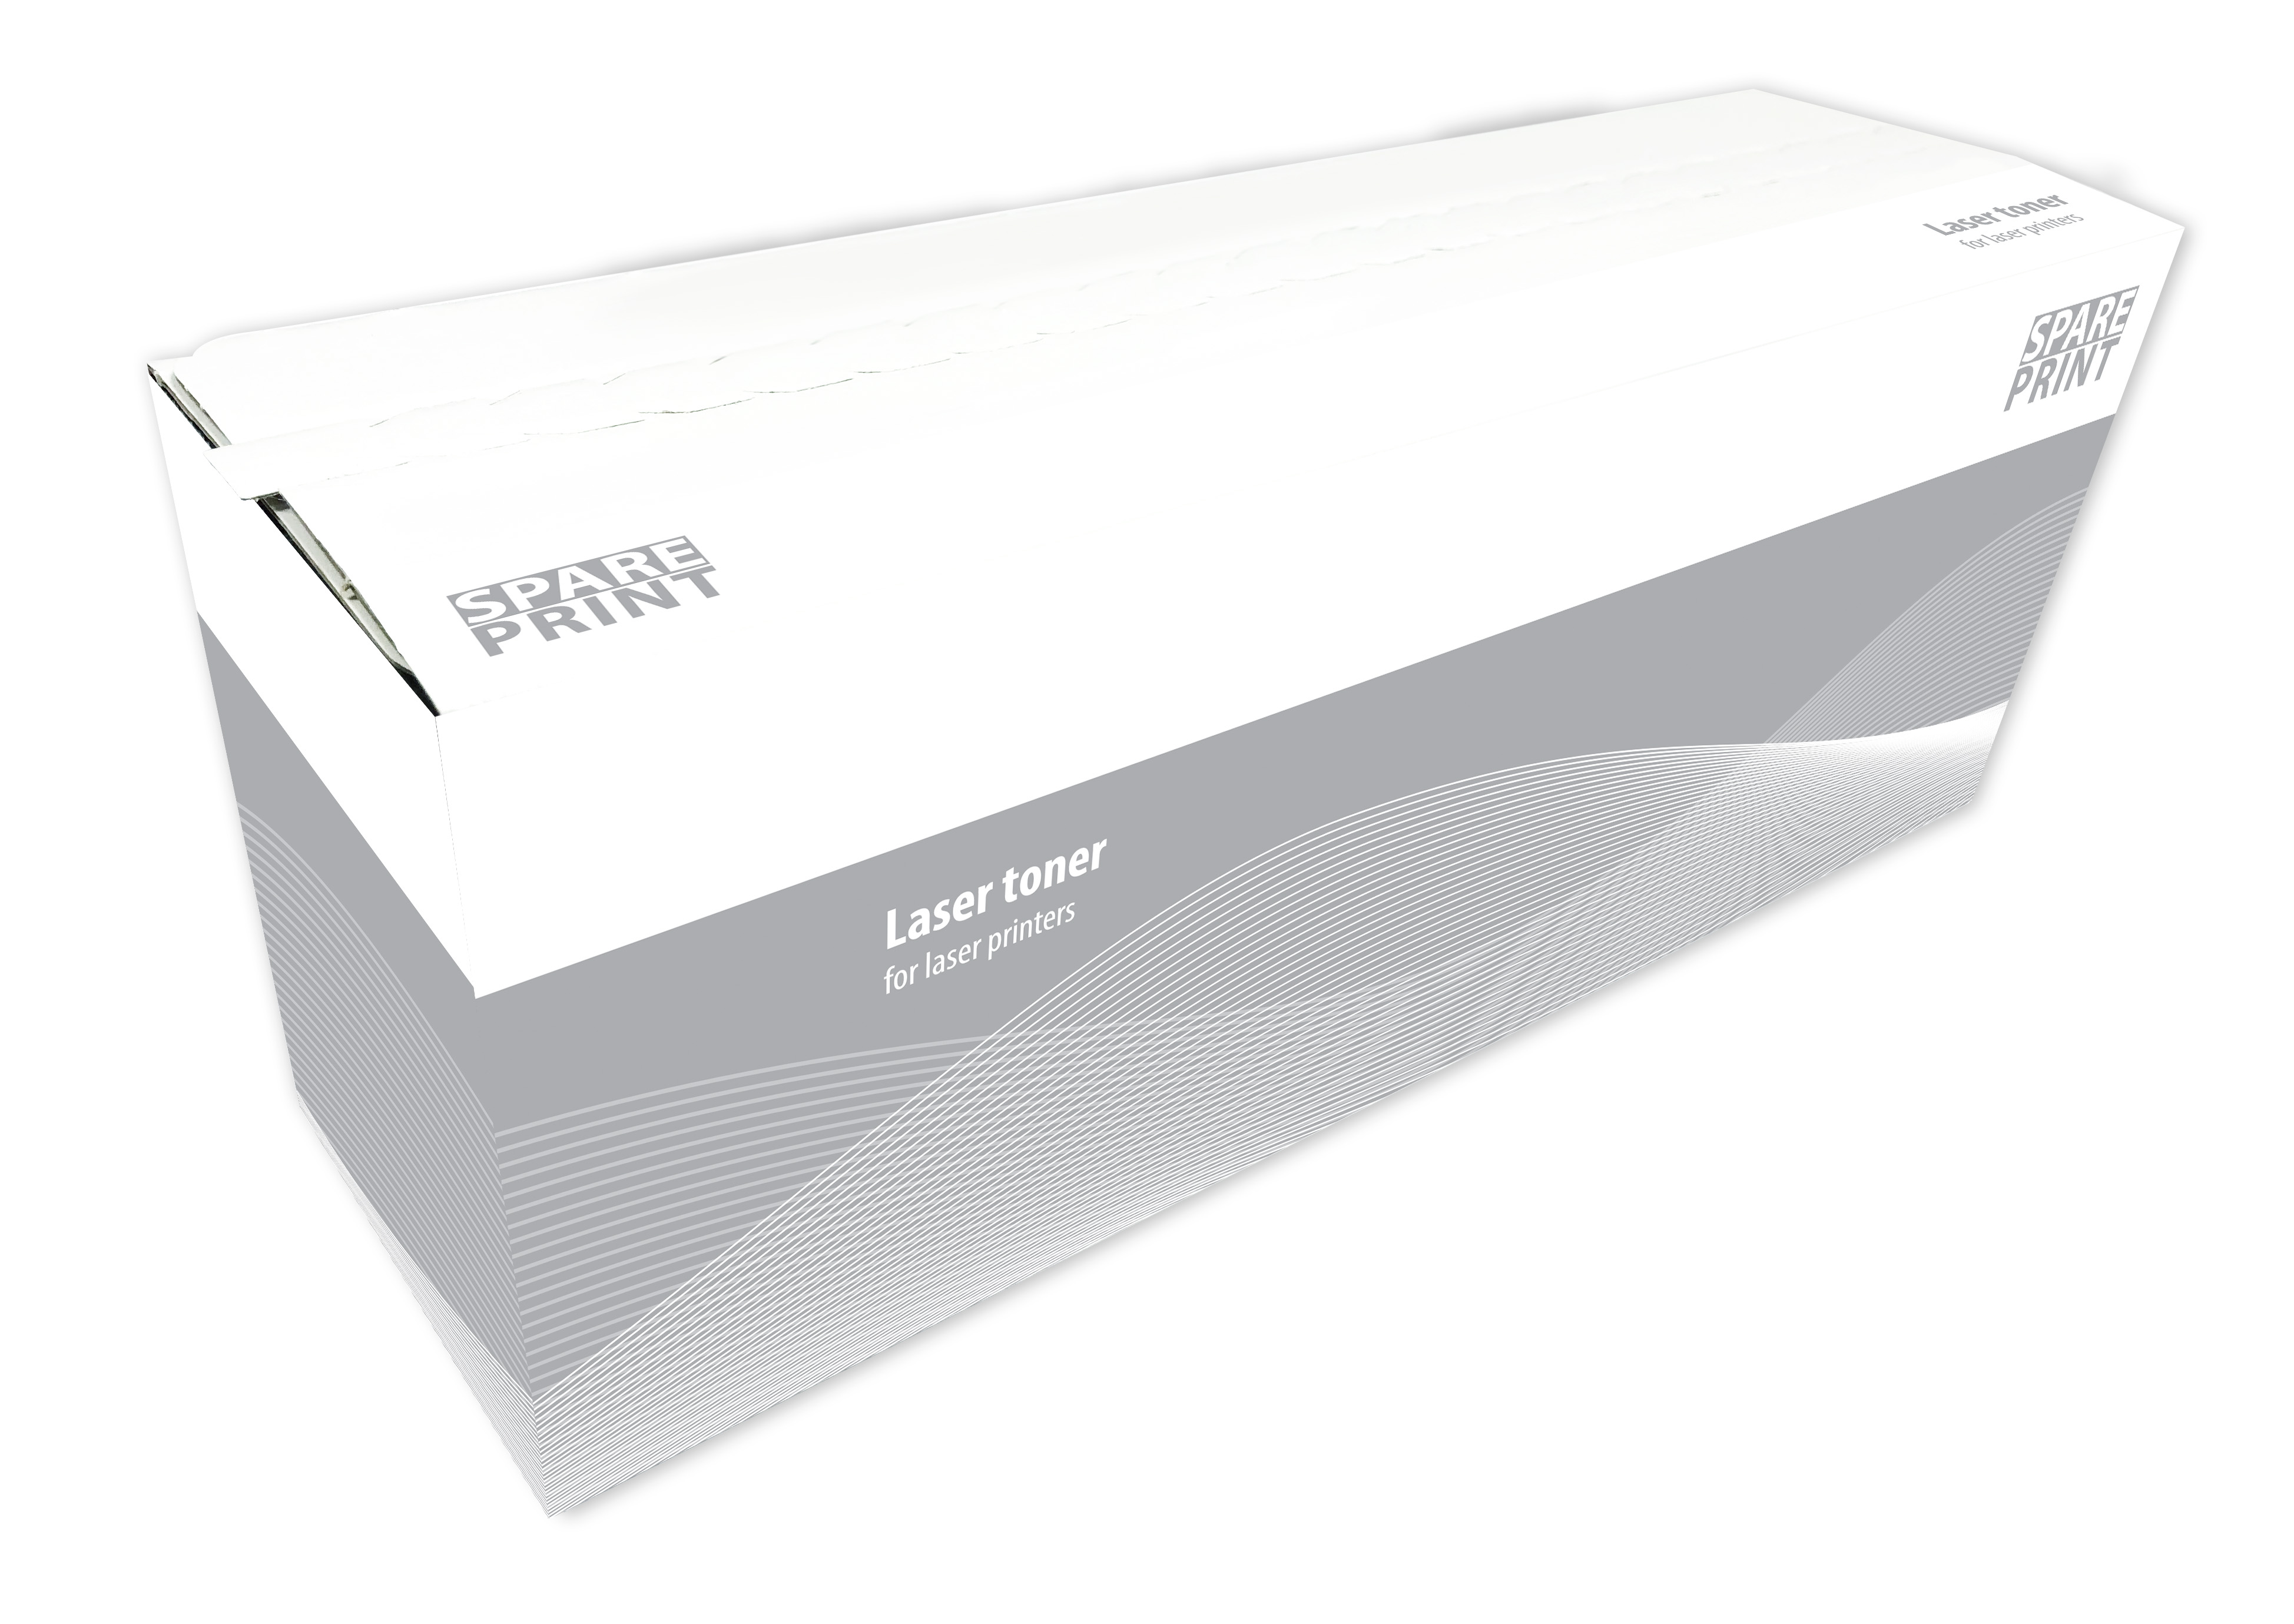 SPARE PRINT kompatibilní toner 106R03488 Black pro tiskárny Xerox